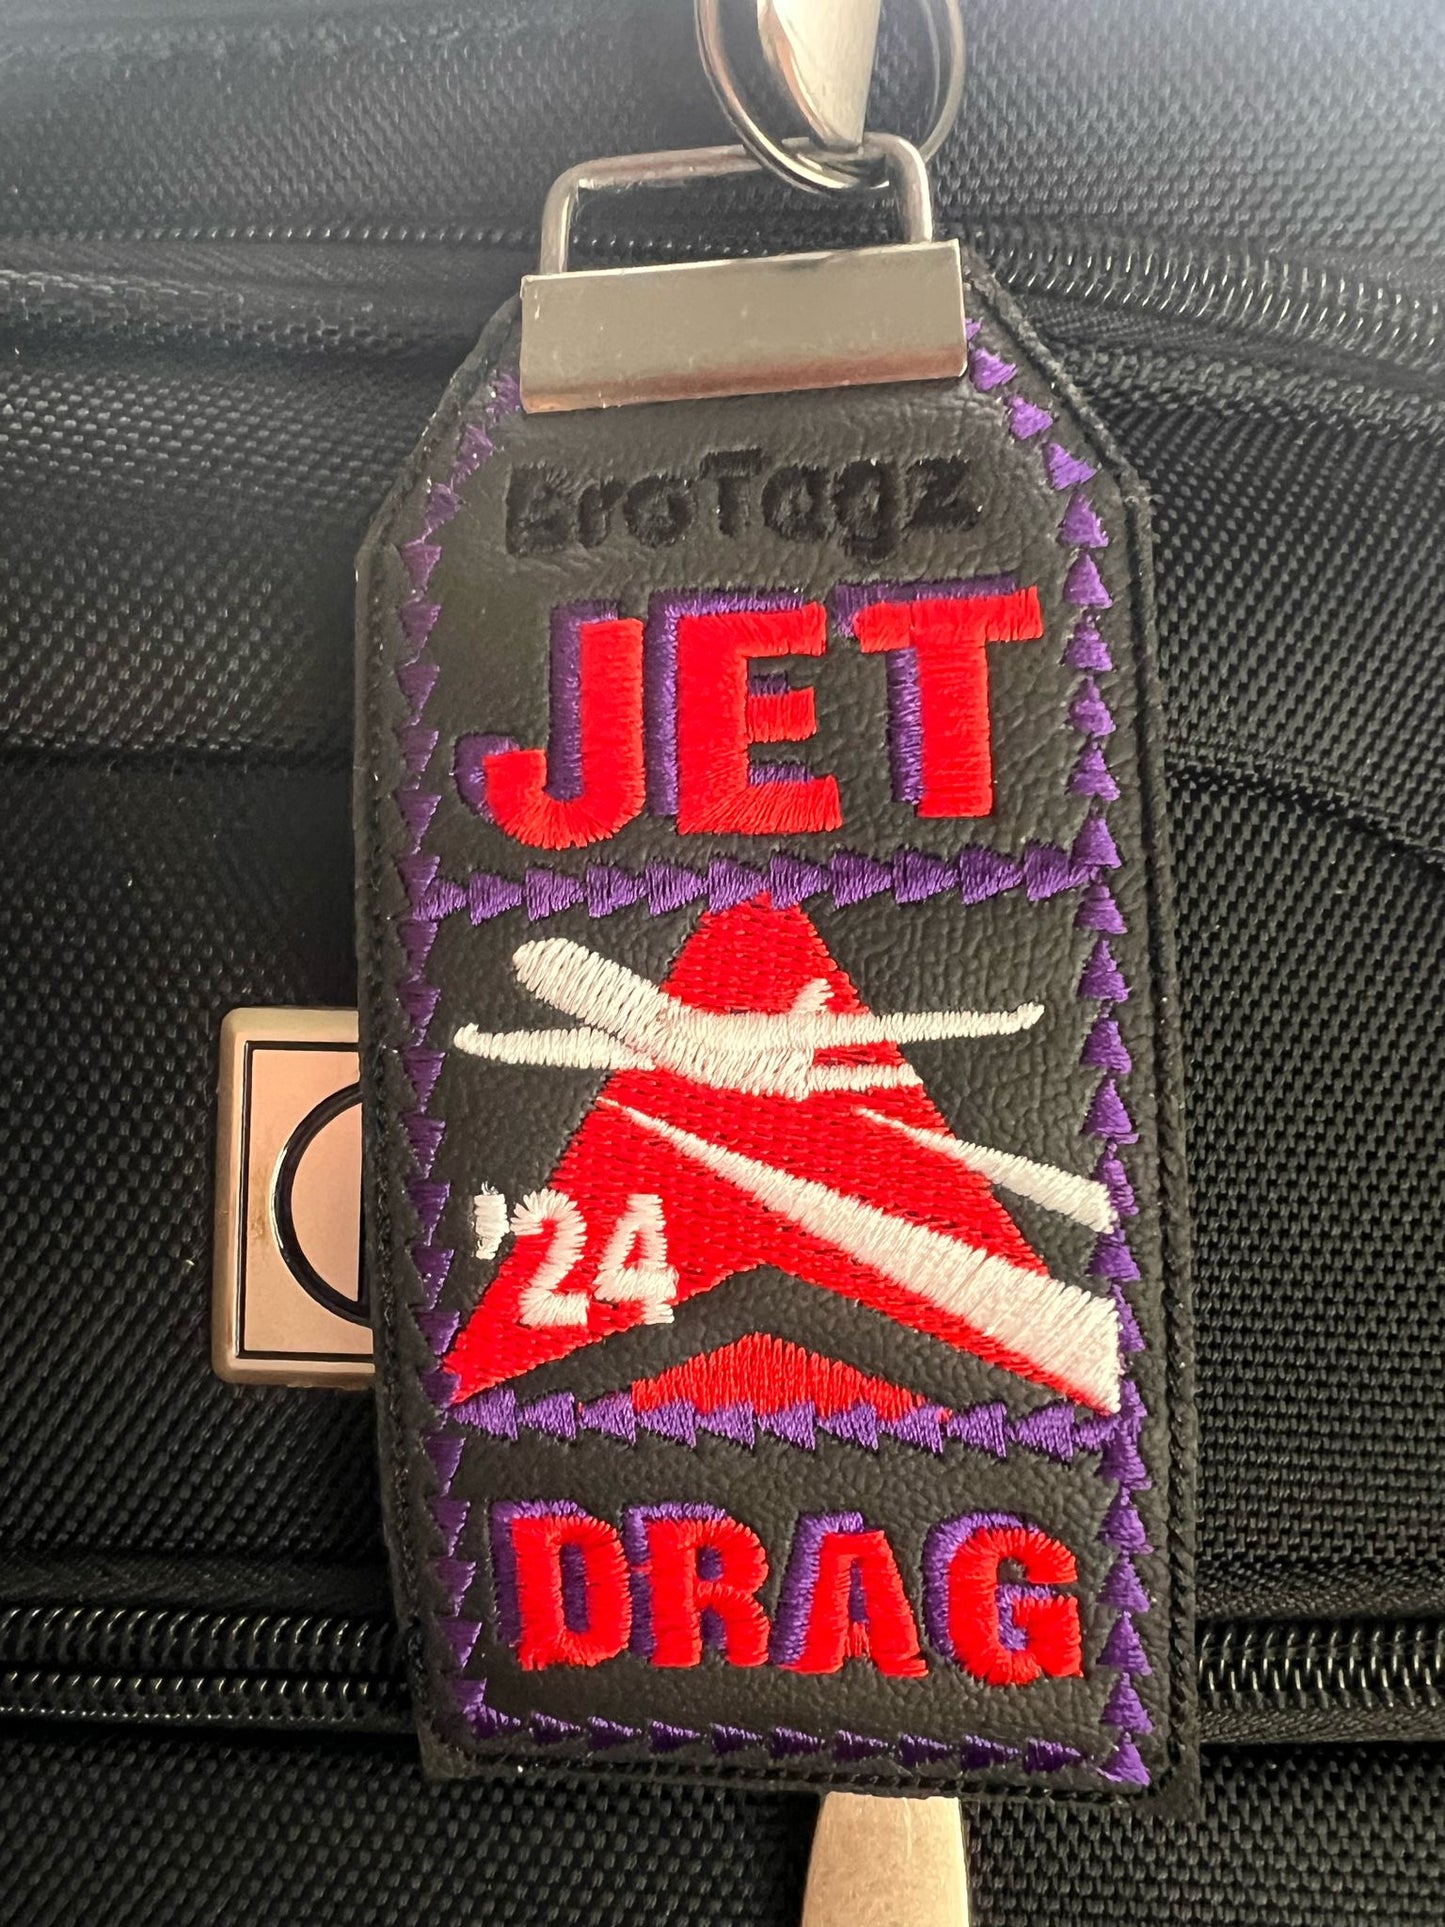 DL JetDrag Themed Bag Tag **Limited Edition**